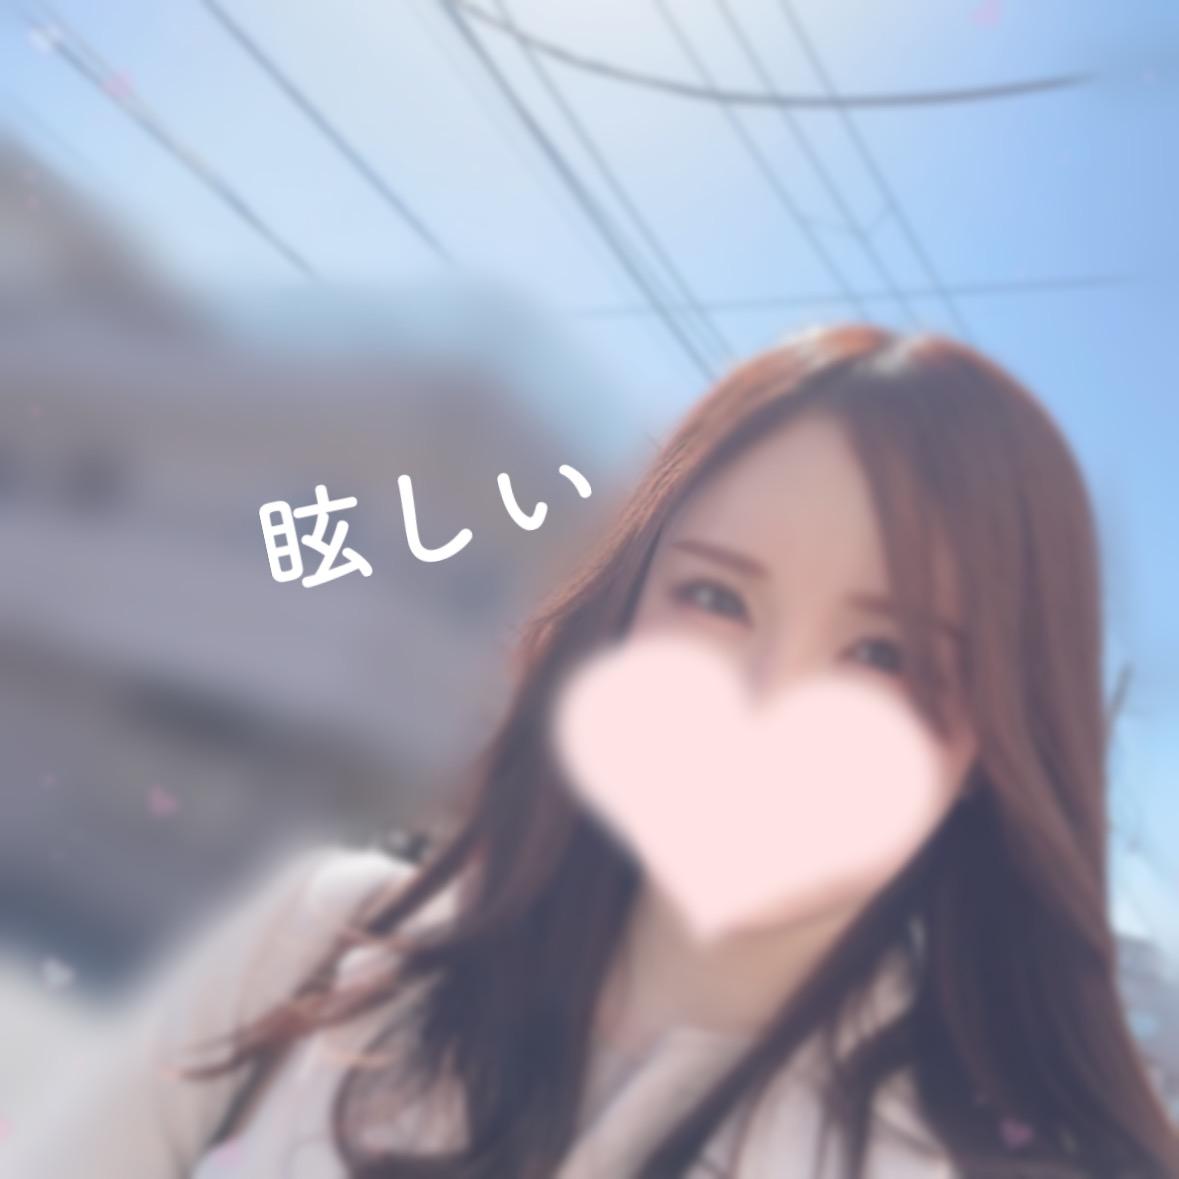 ご予約満了<img class="emojione" alt="🙏" title=":pray:" src="https://fuzoku.jp/assets/img/emojione/1f64f.png"/><img class="emojione" alt="❤️" title=":heart:" src="https://fuzoku.jp/assets/img/emojione/2764.png"/>